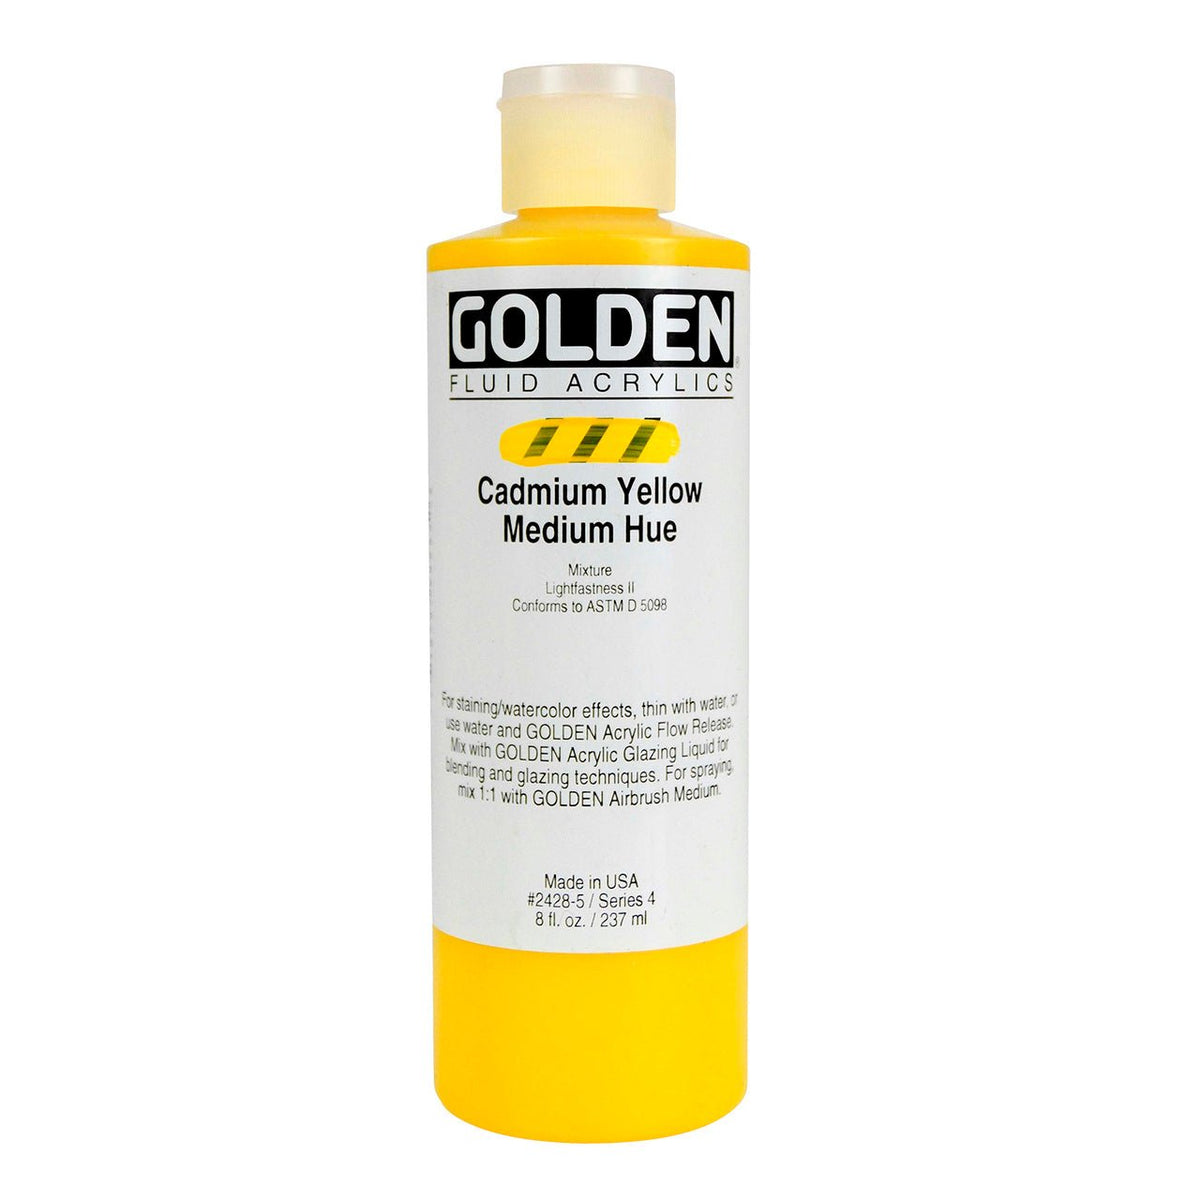 Golden Fluid Acrylic - Cadmium Yellow Medium Hue 4 oz.